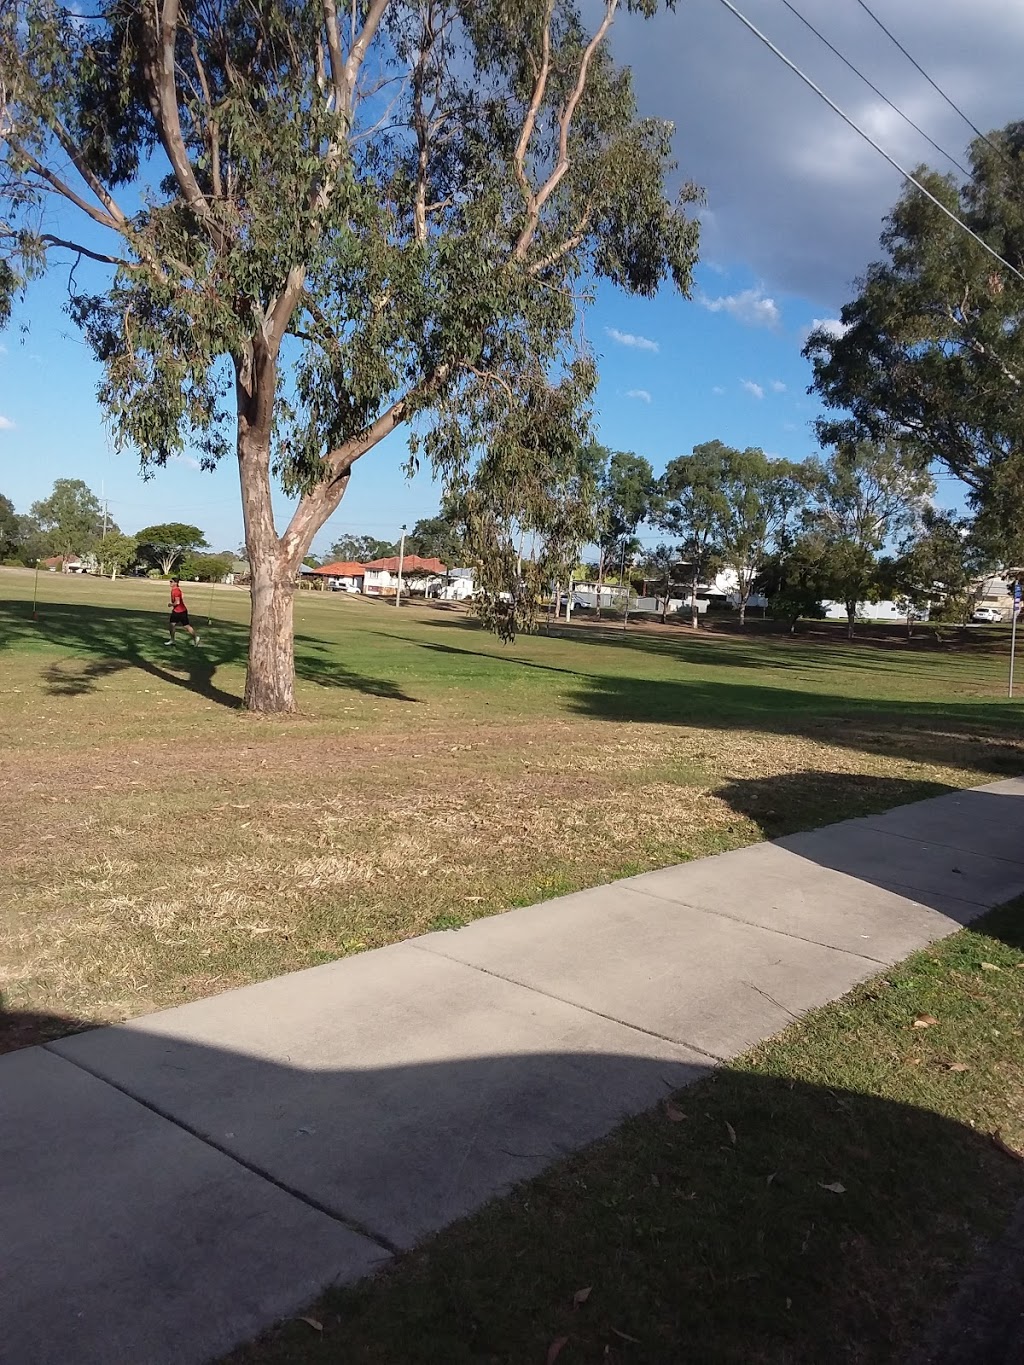 Roy Harvey Park | park | Byth St, Stafford QLD 4053, Australia